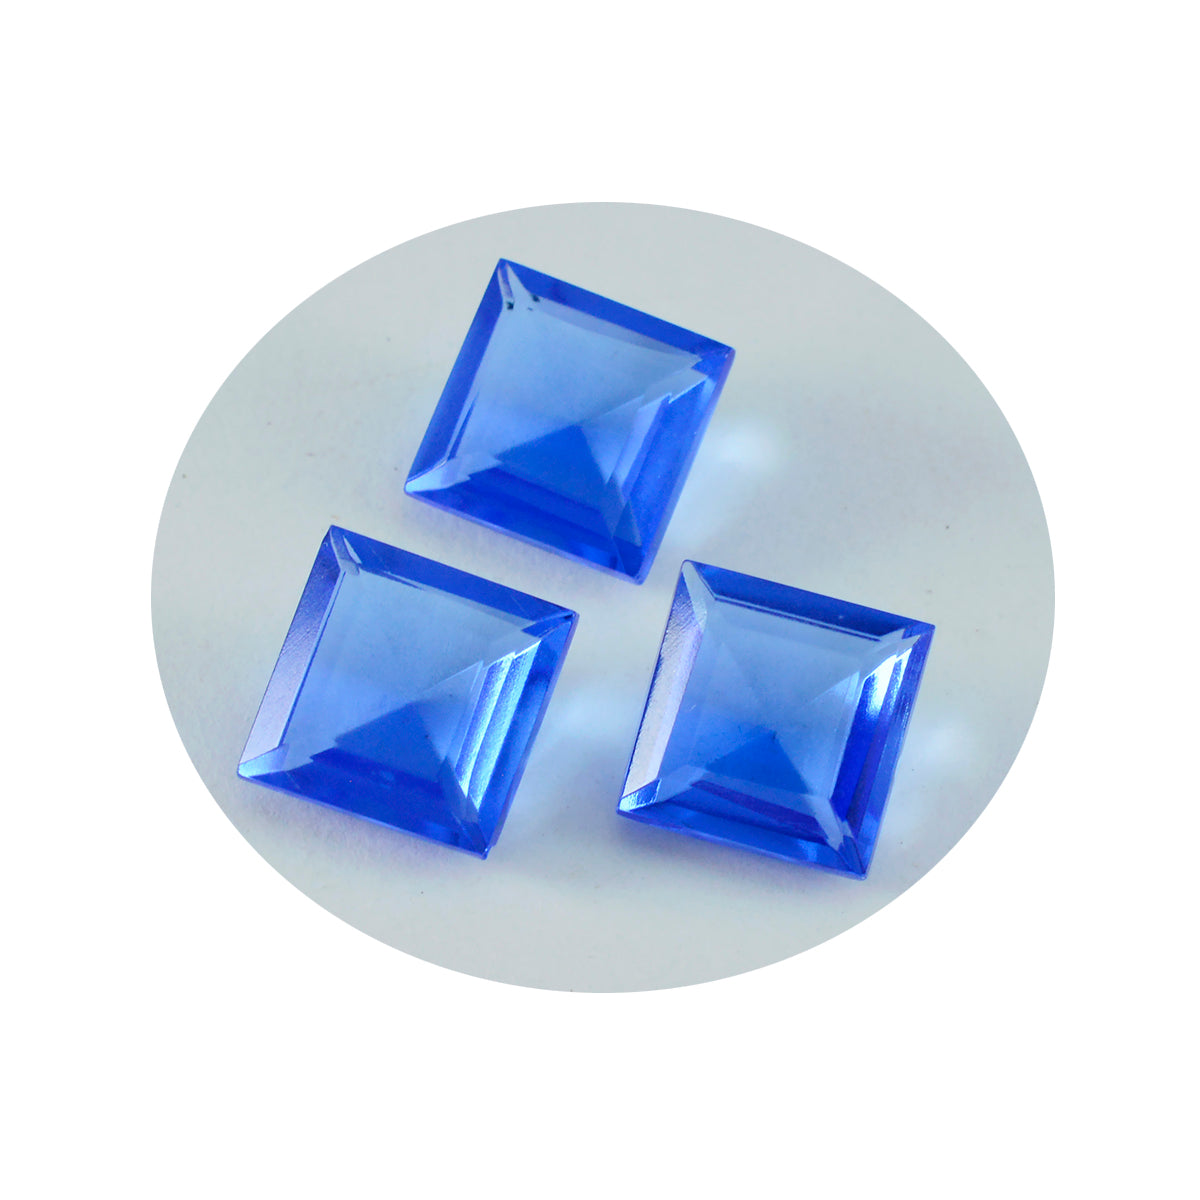 riyogems 1 st blå safir cz fasetterad 14x14 mm fyrkantig form vacker kvalitetspärla